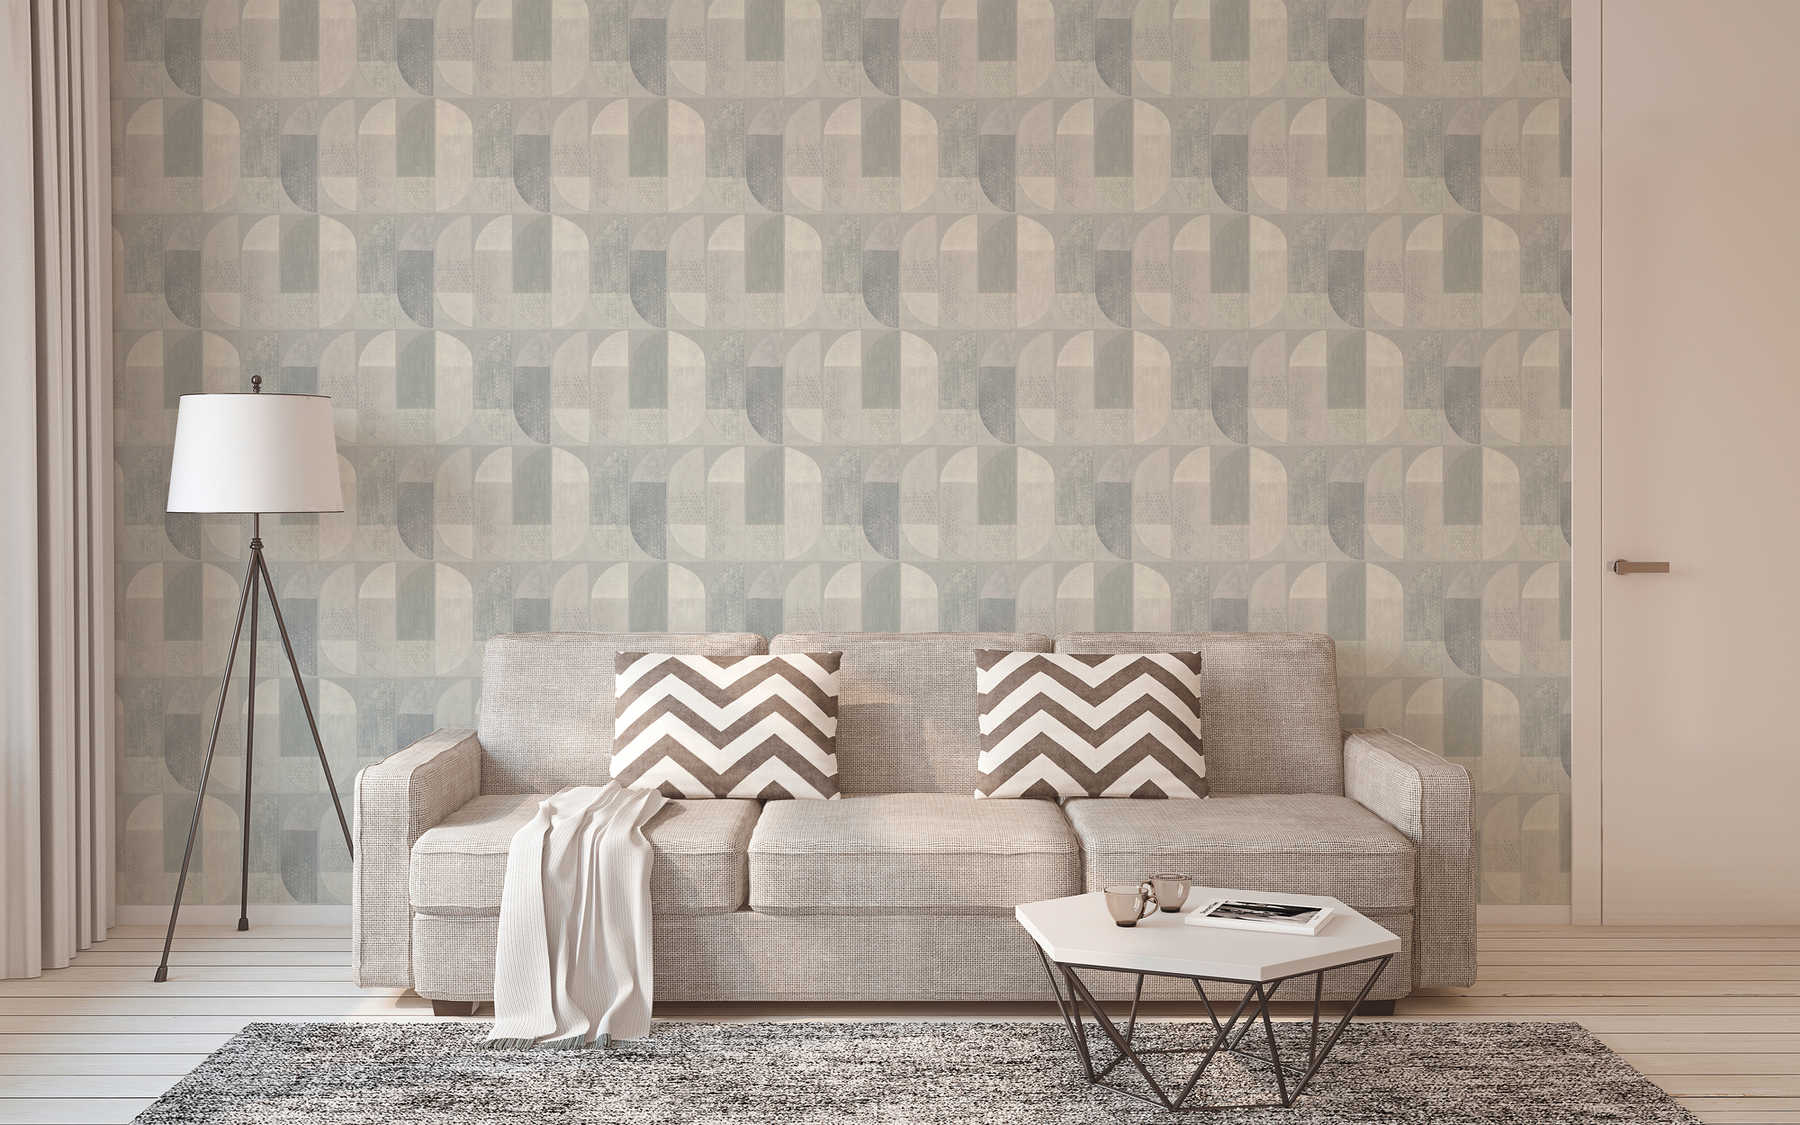             Wallpaper retro design in Scandinavian style - grey
        